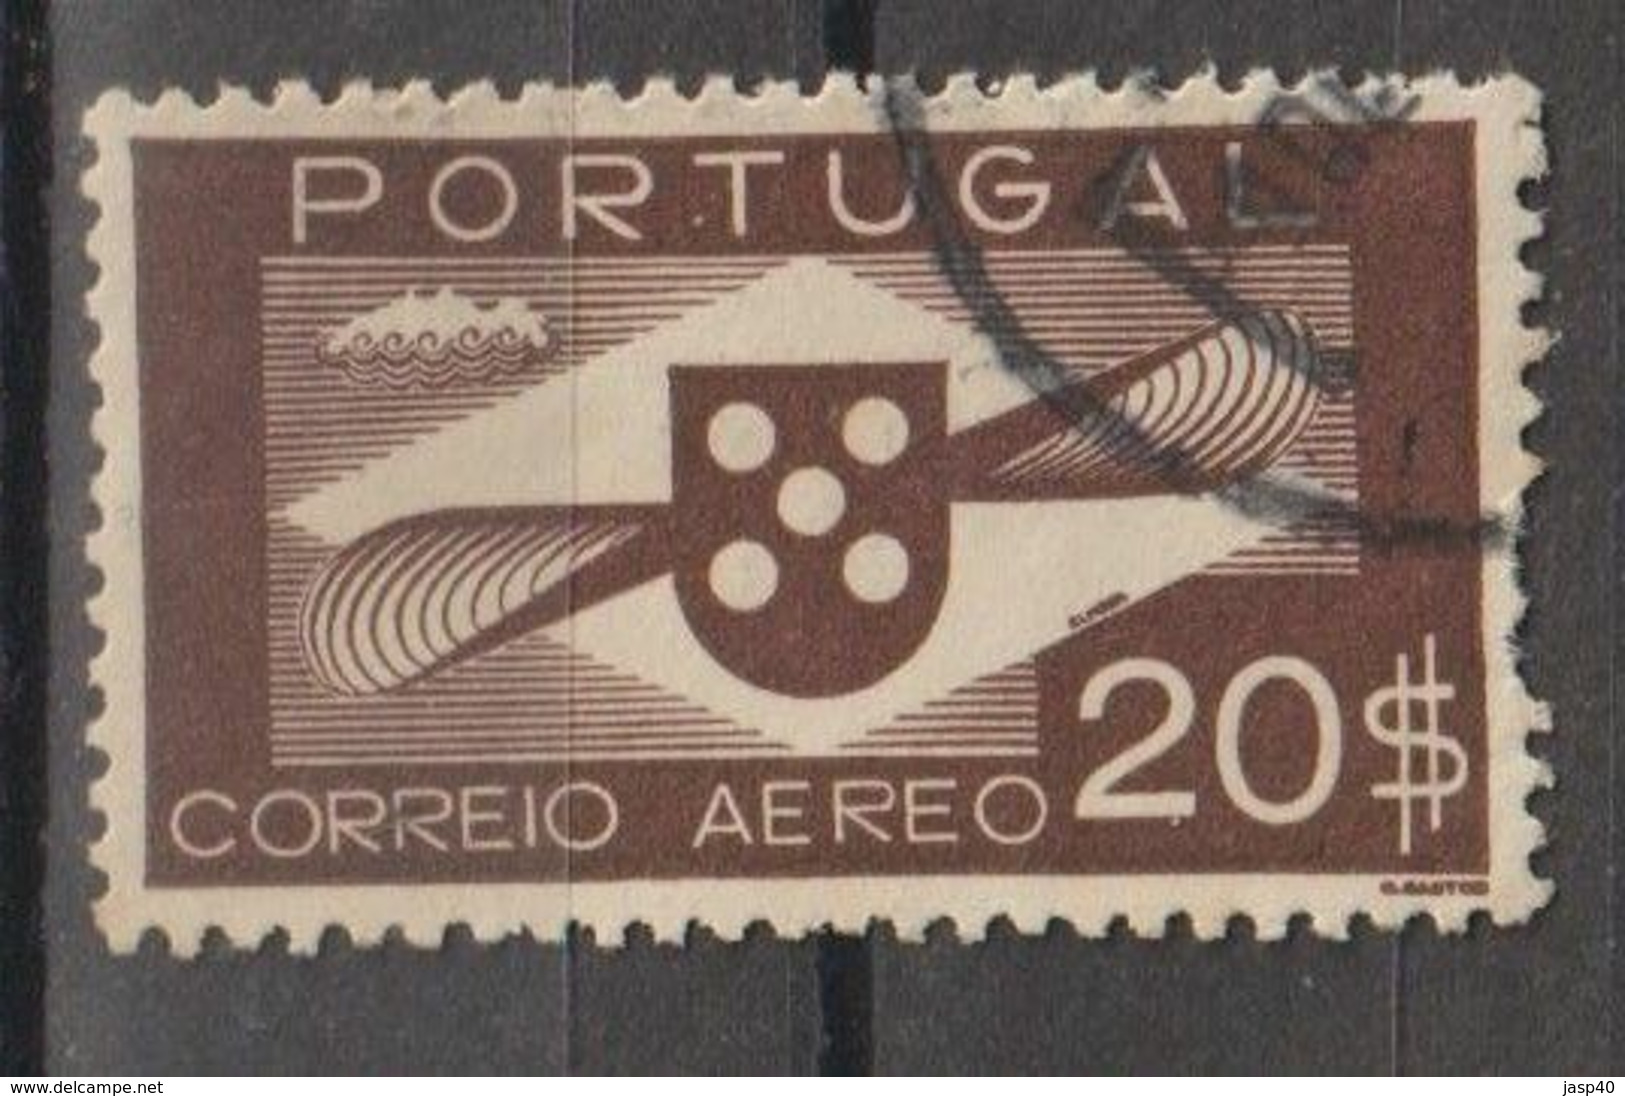 PORTUGAL CE AFINSA CORREIO AEREO 9 - USADO - Used Stamps